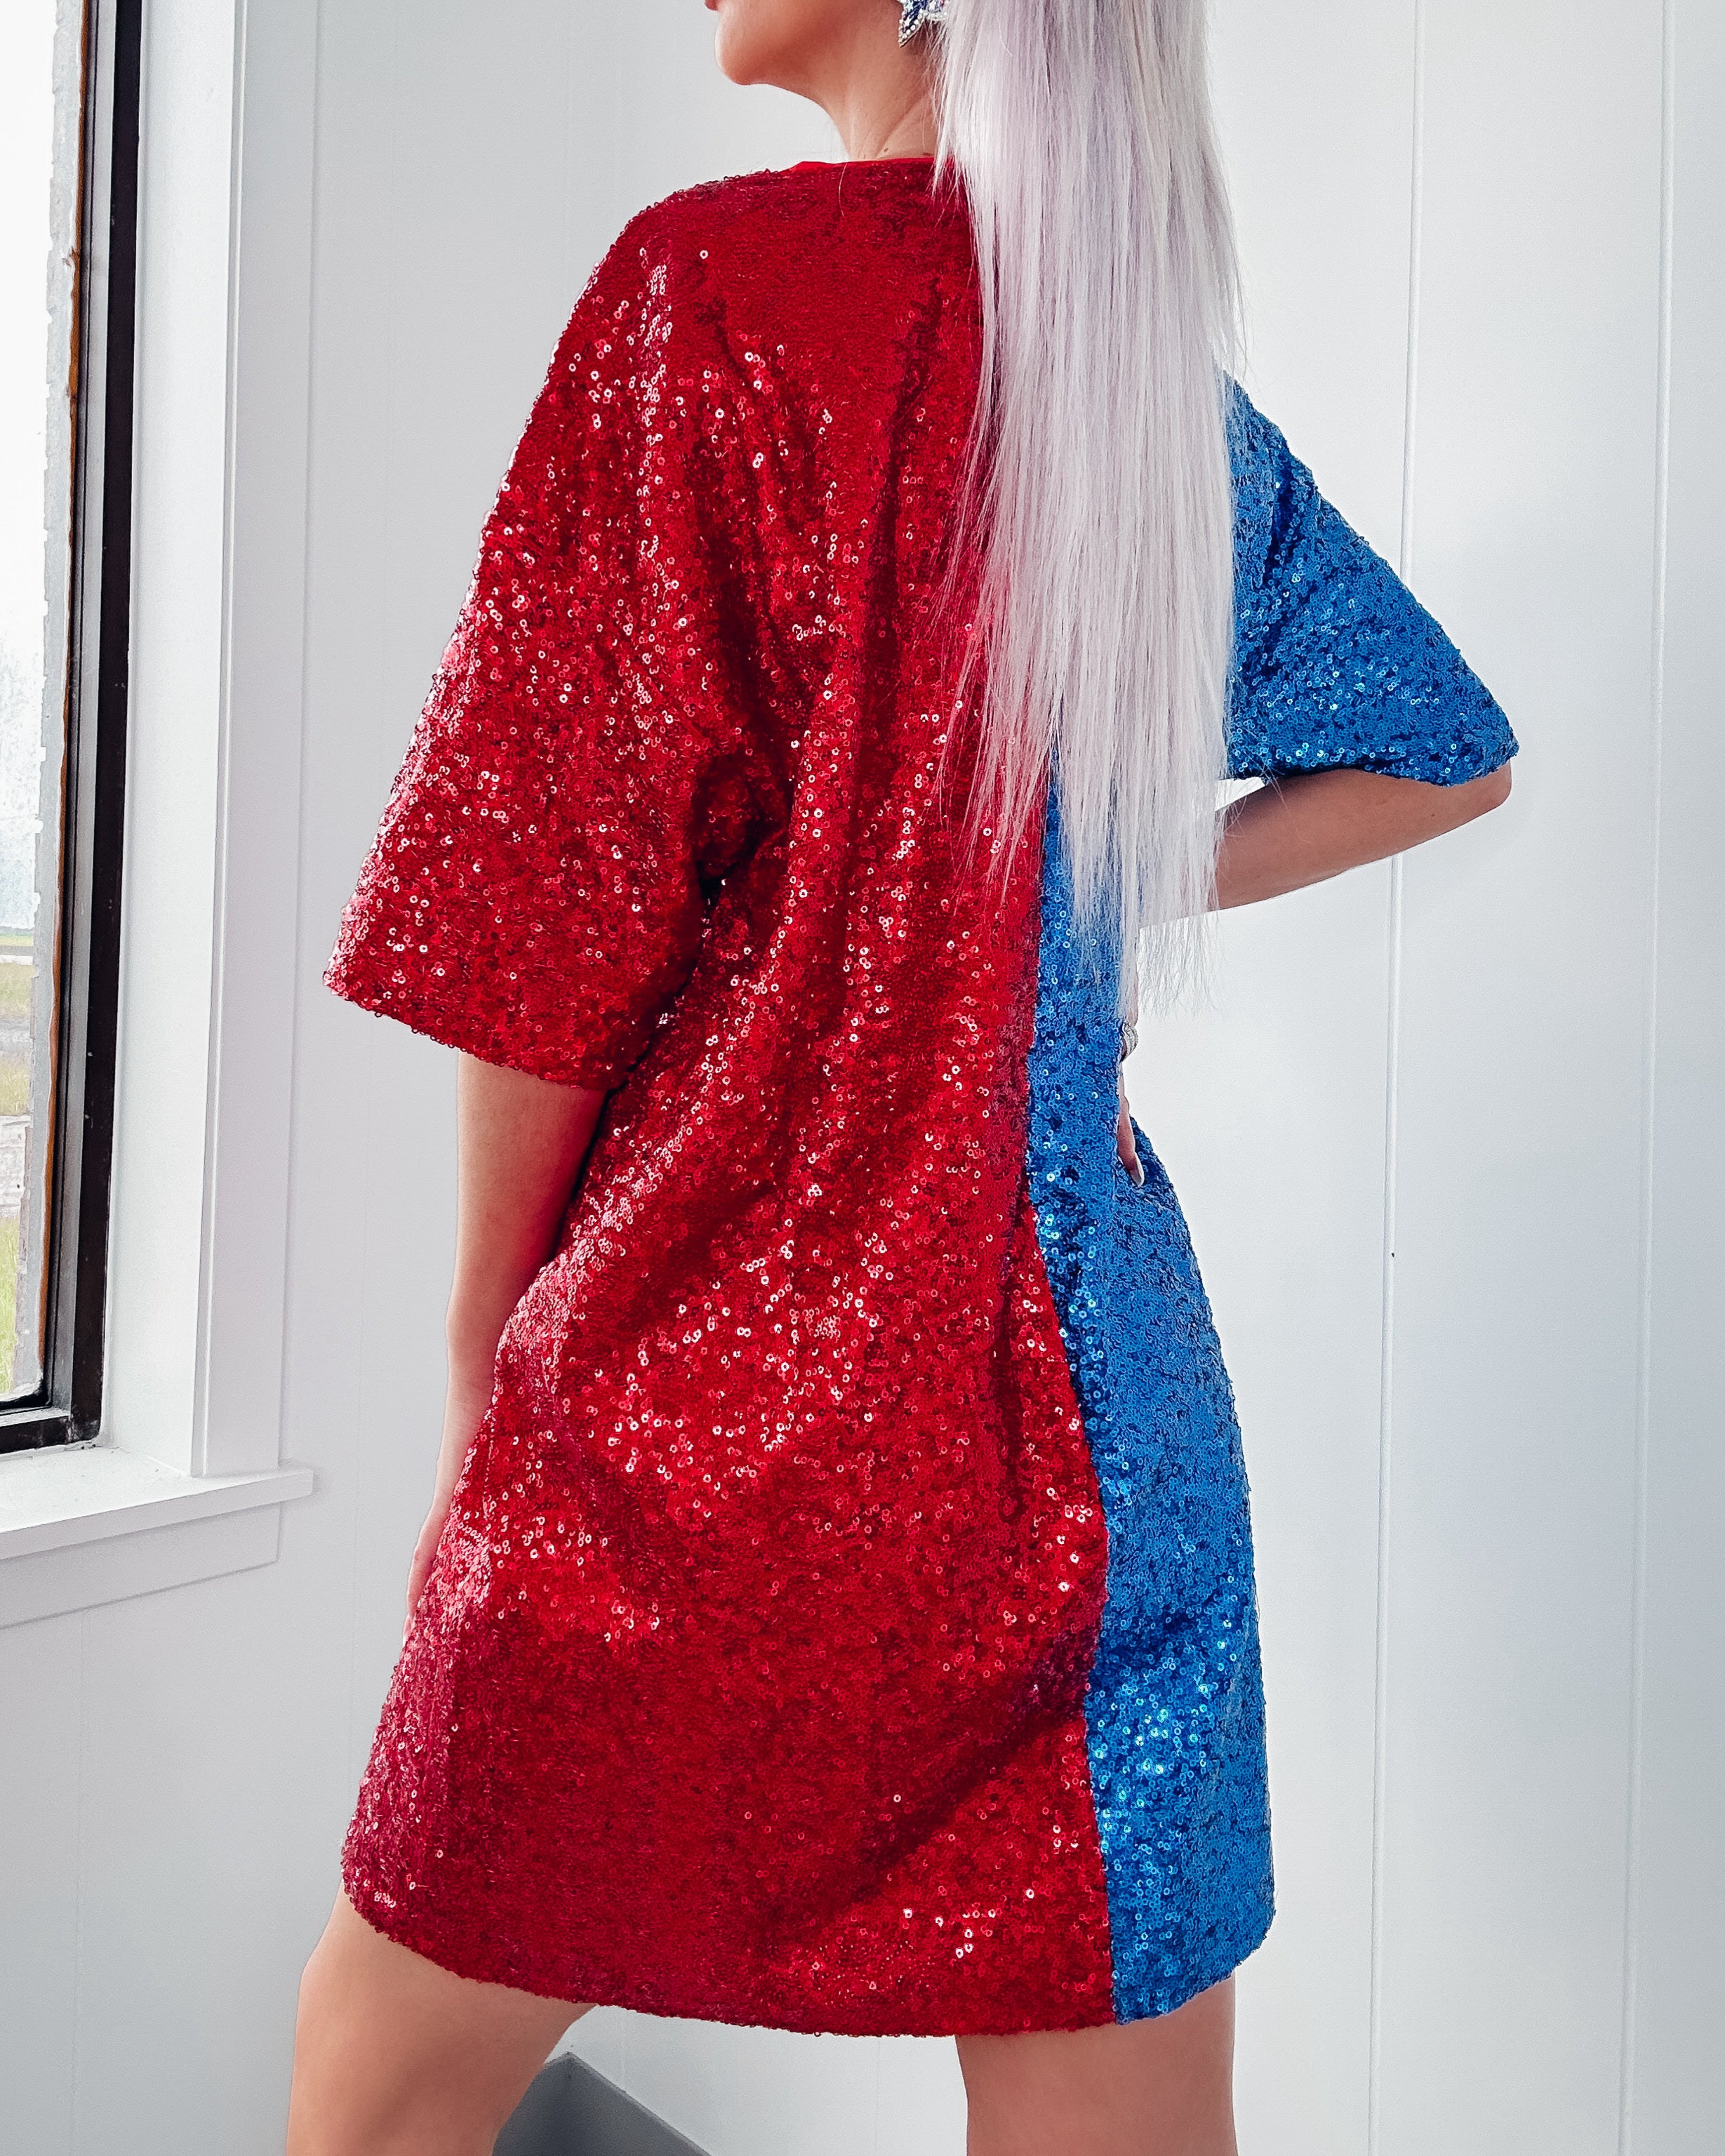 Starstruck Sequin Dress - Red/Blue